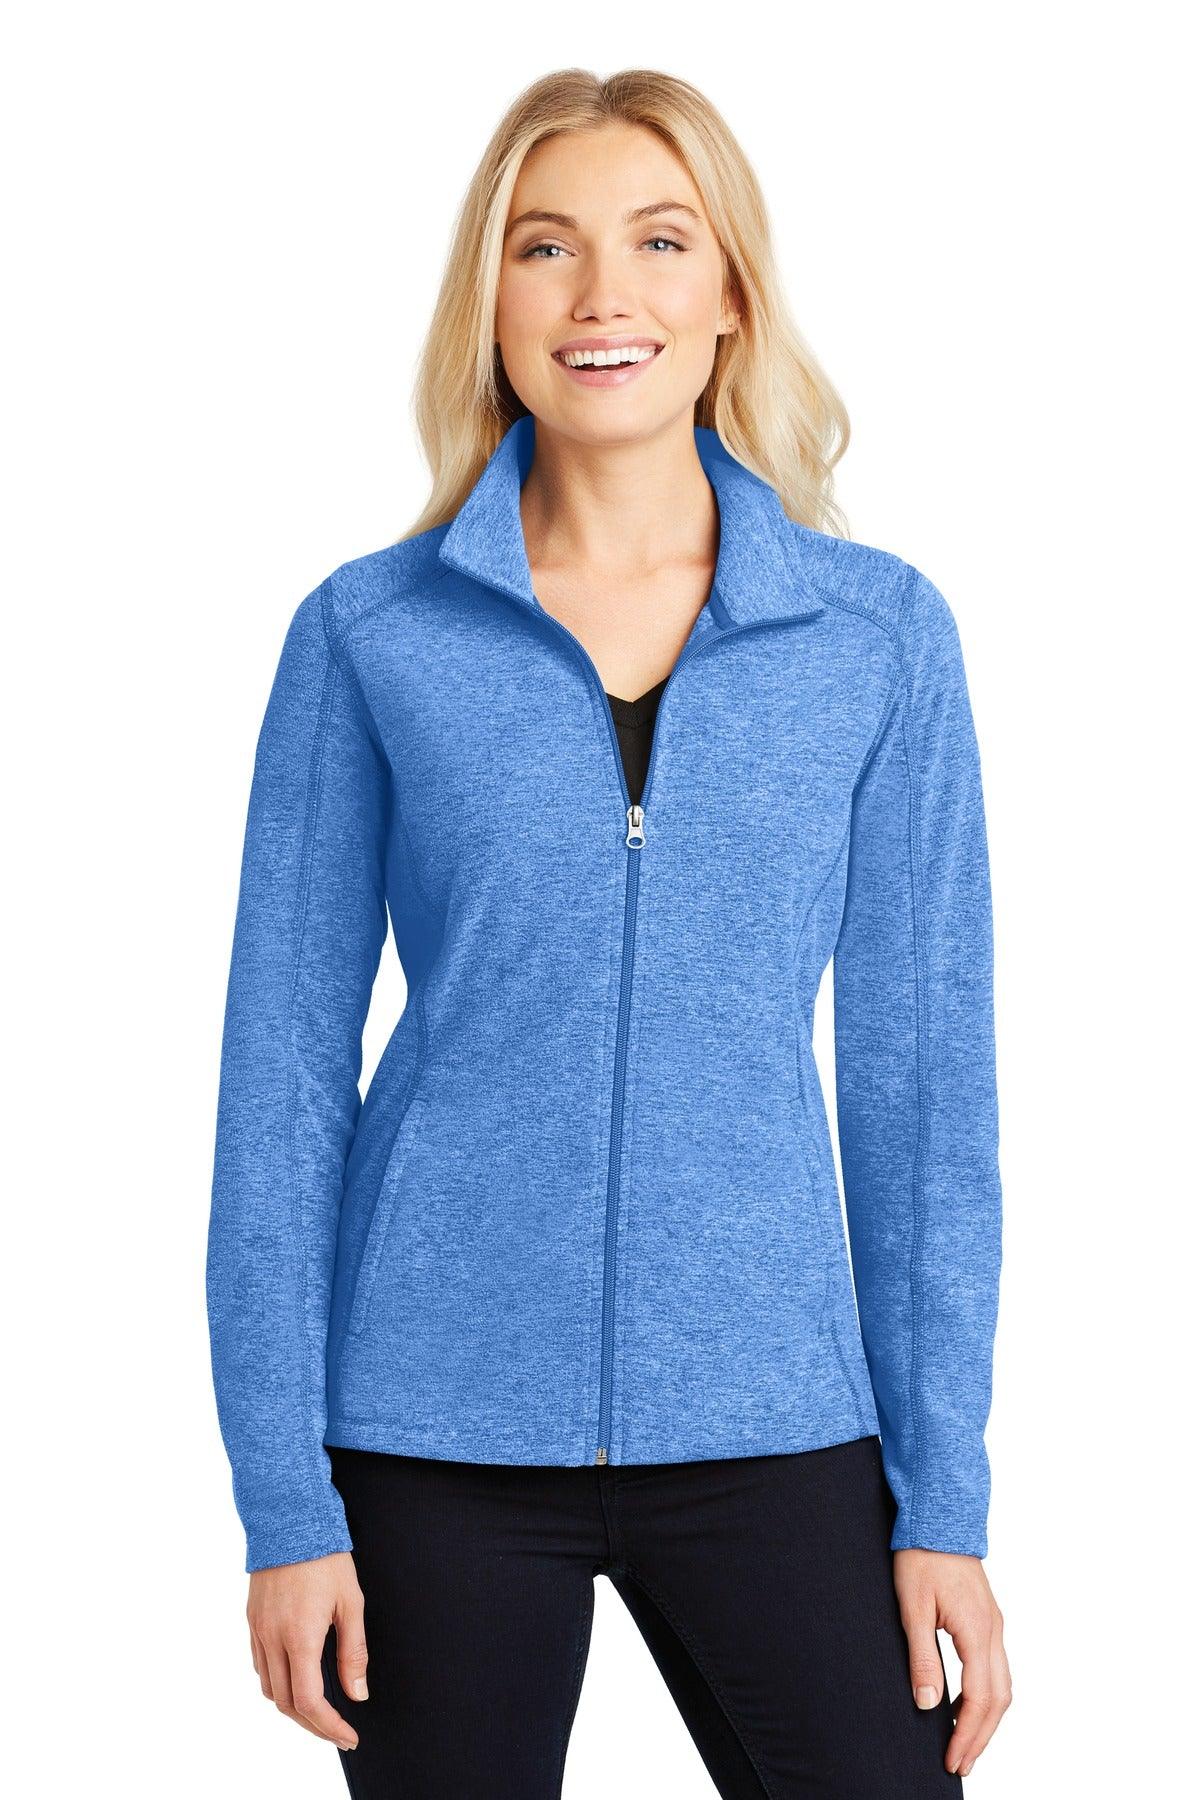 Port Authority Ladies Heather Microfleece Full-Zip Jacket. L235 - Dresses Max